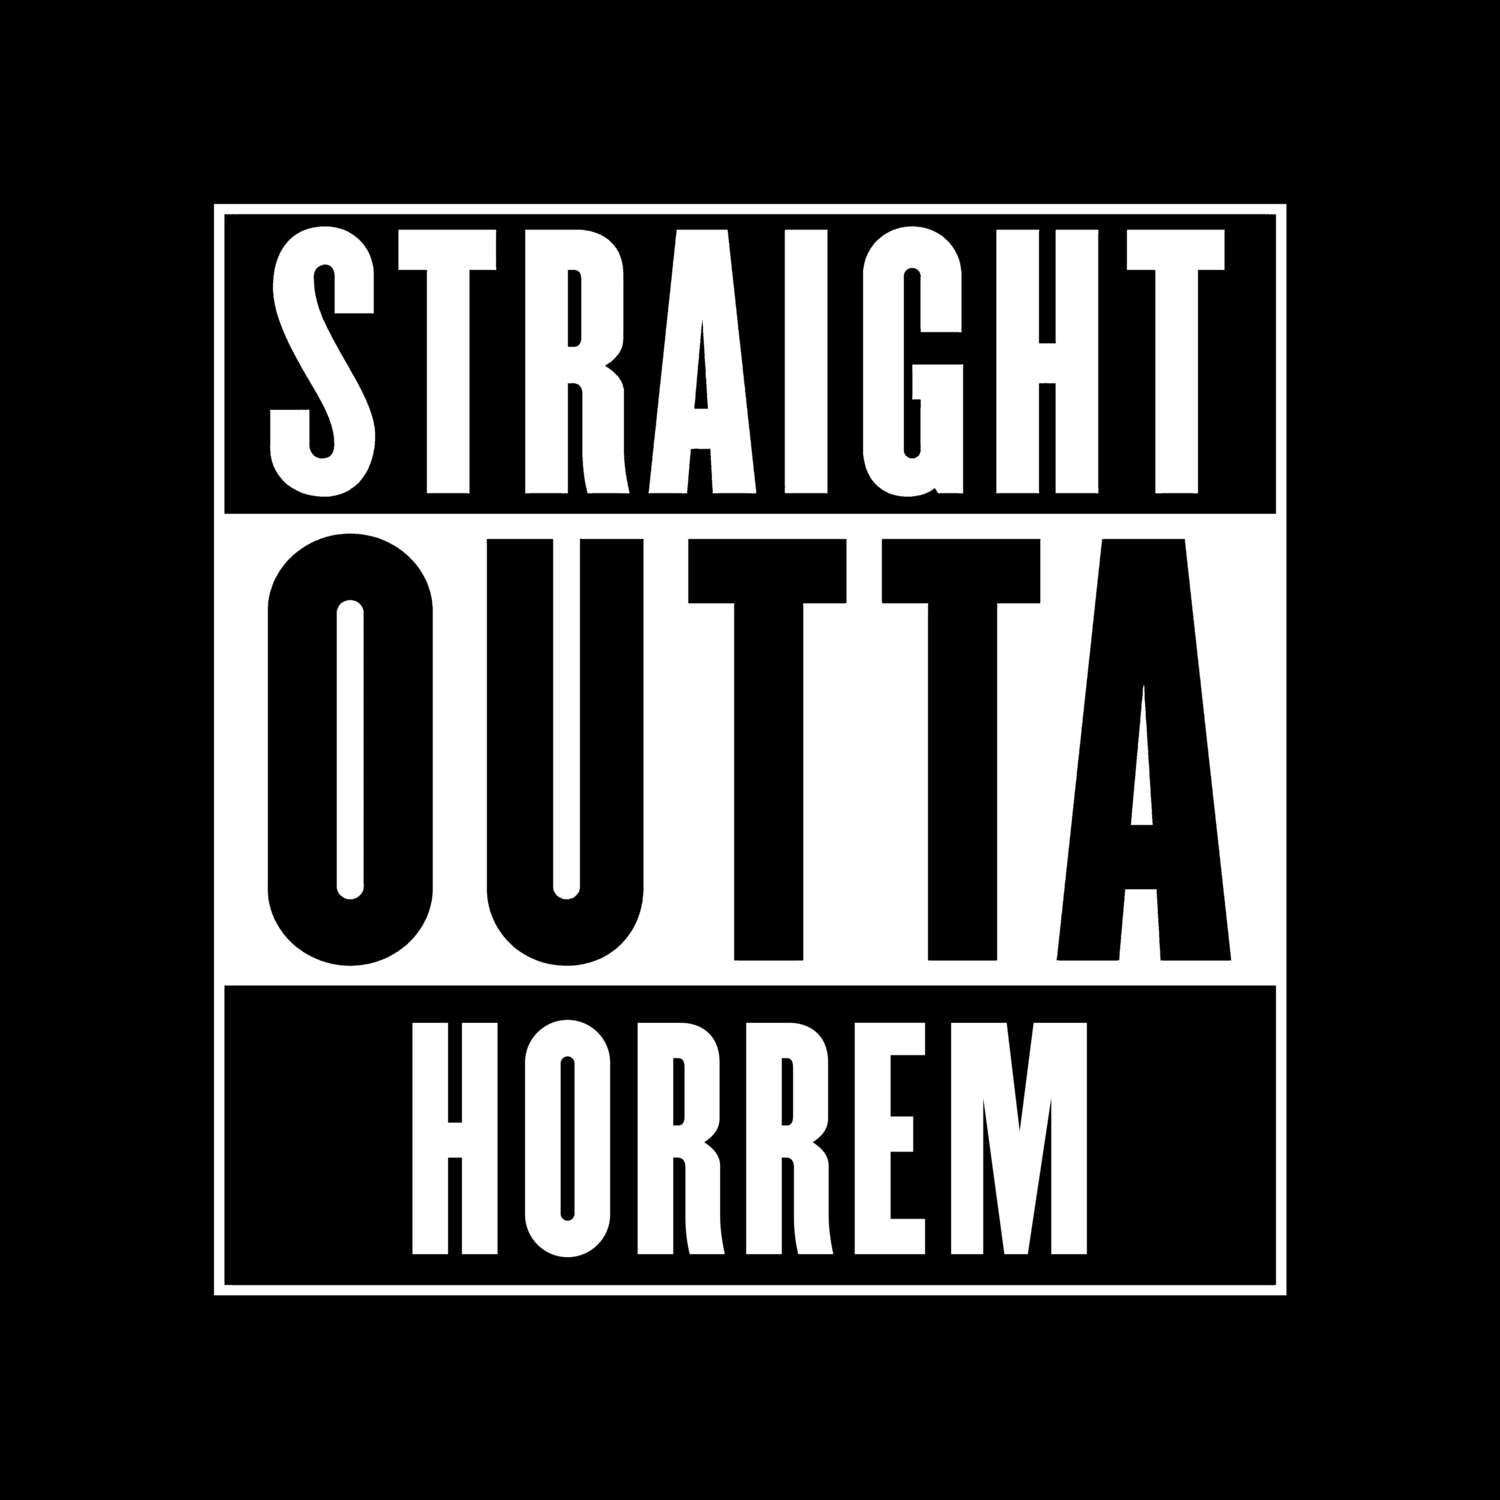 Horrem T-Shirt »Straight Outta«